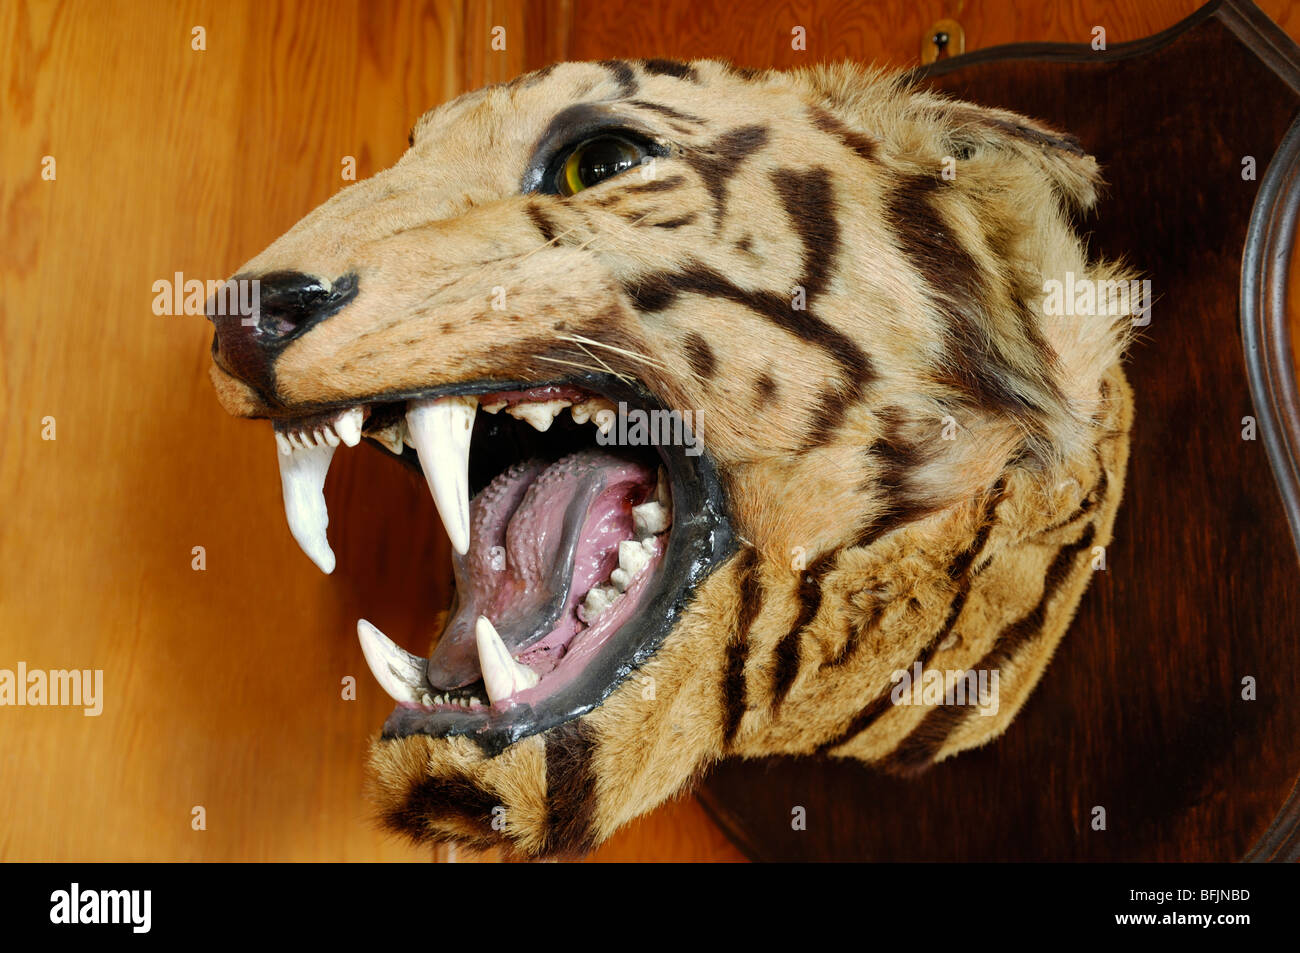 Stuffed tiger's head baring sharp teeth Stock Photo